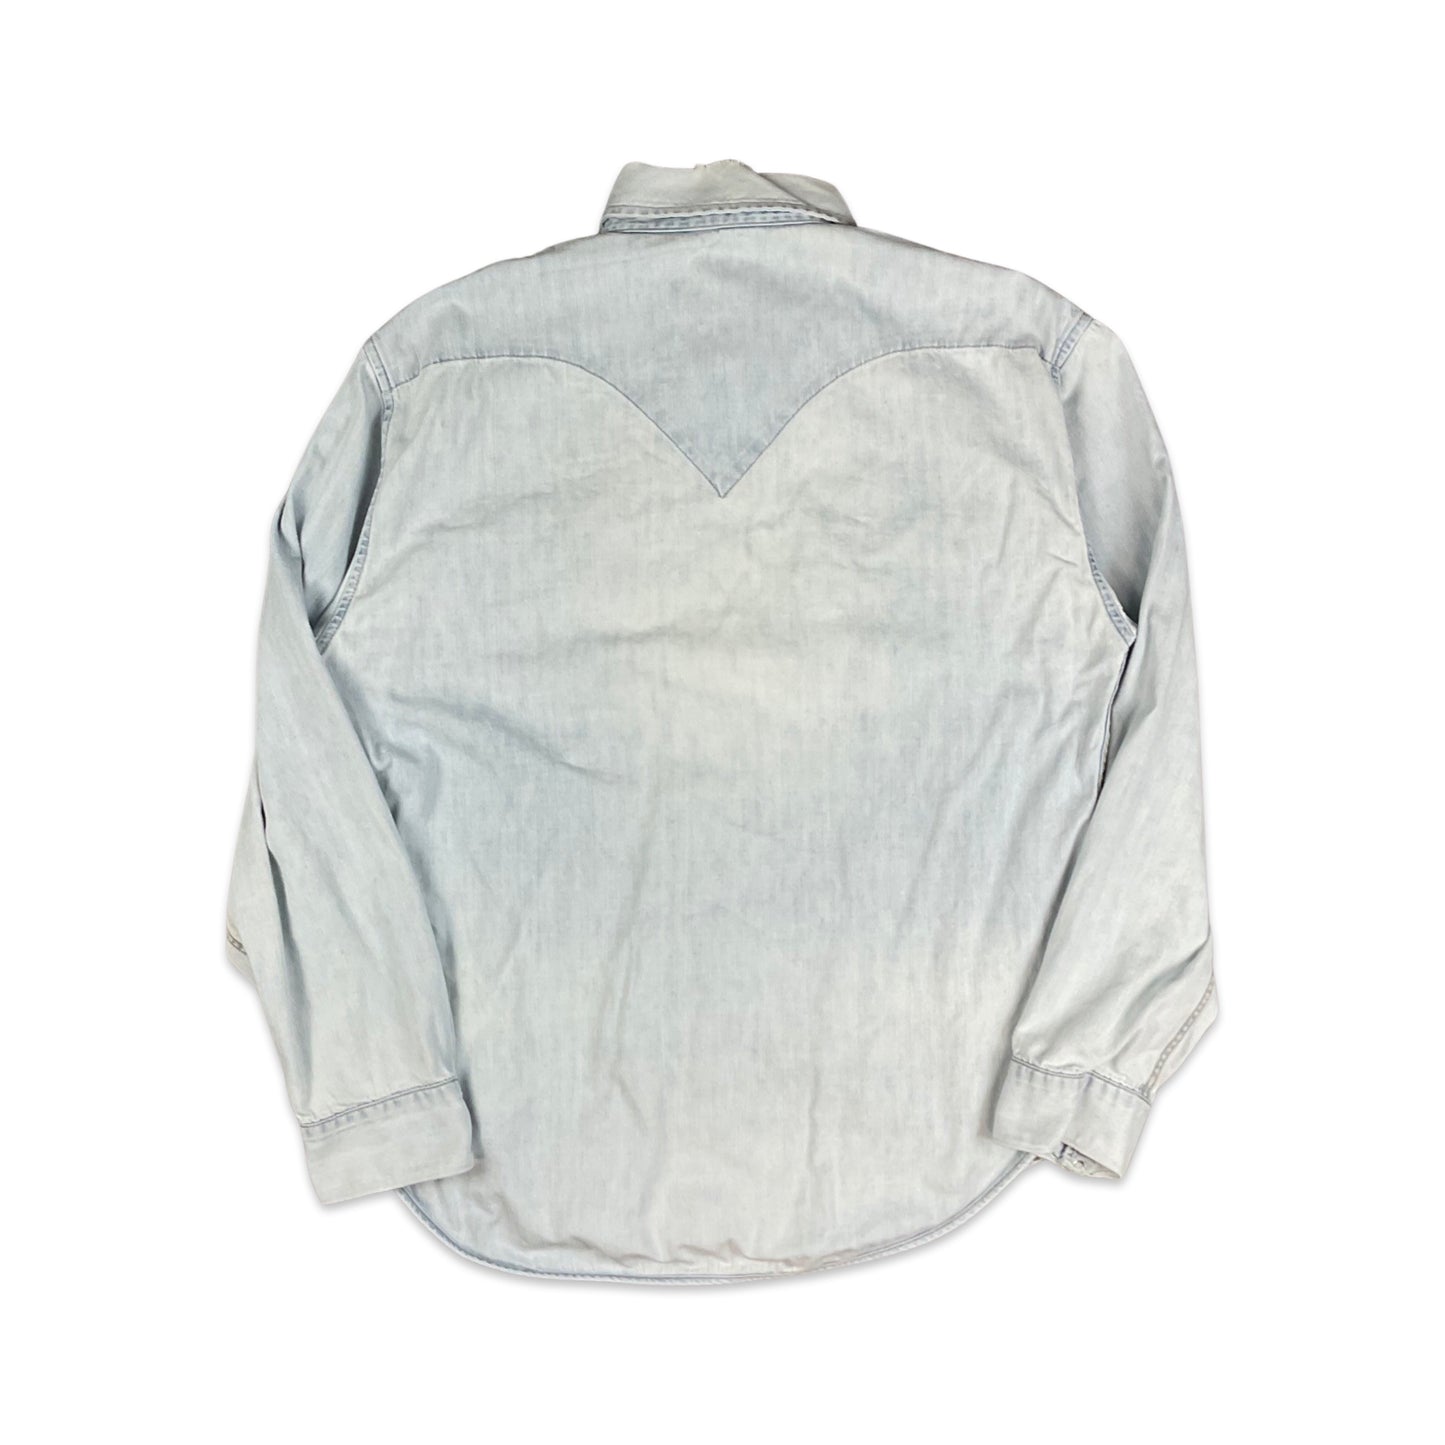 Vintage Levi's Distressed Light Blue Denim Shirt L XL